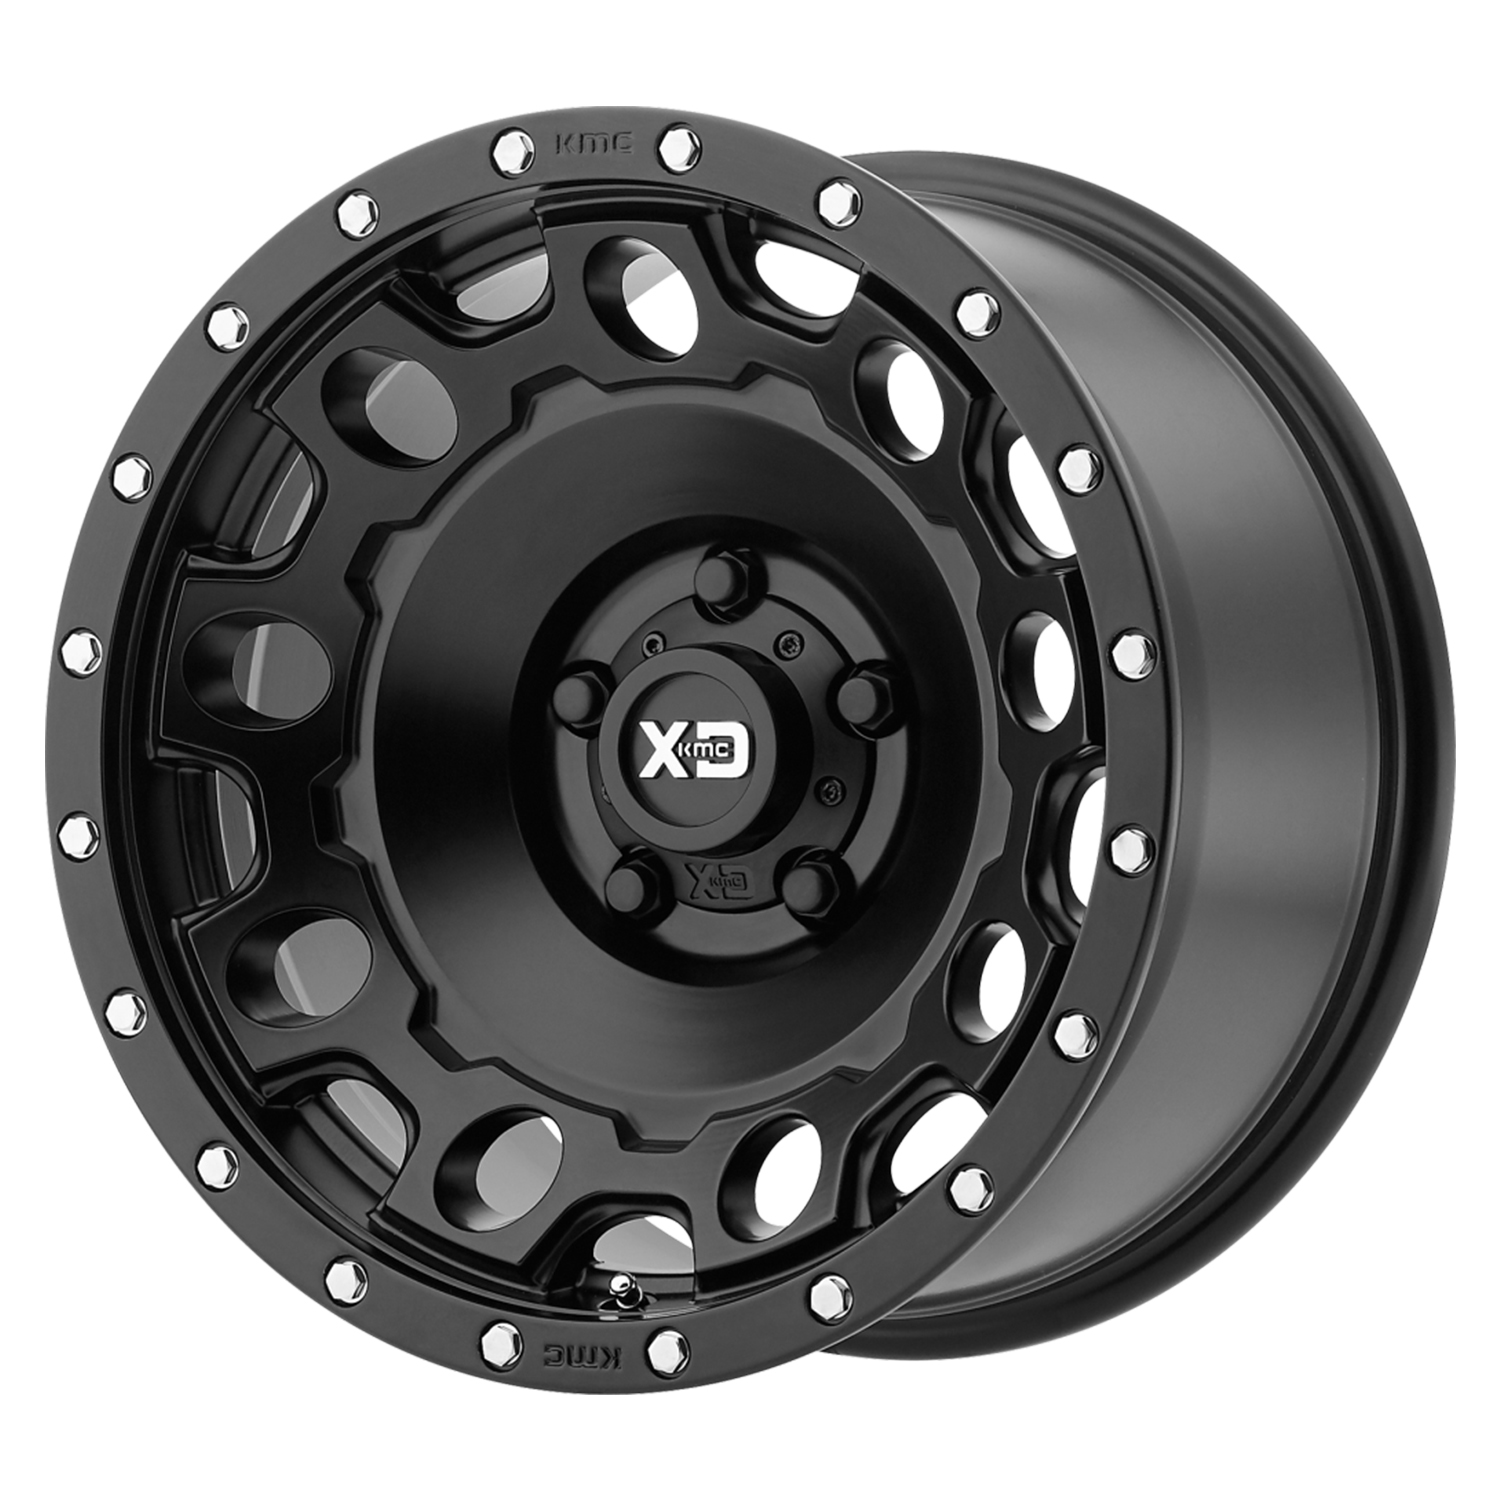 Xd Series Holeshot 17x8.5 5x127 34et Satin Black wheel